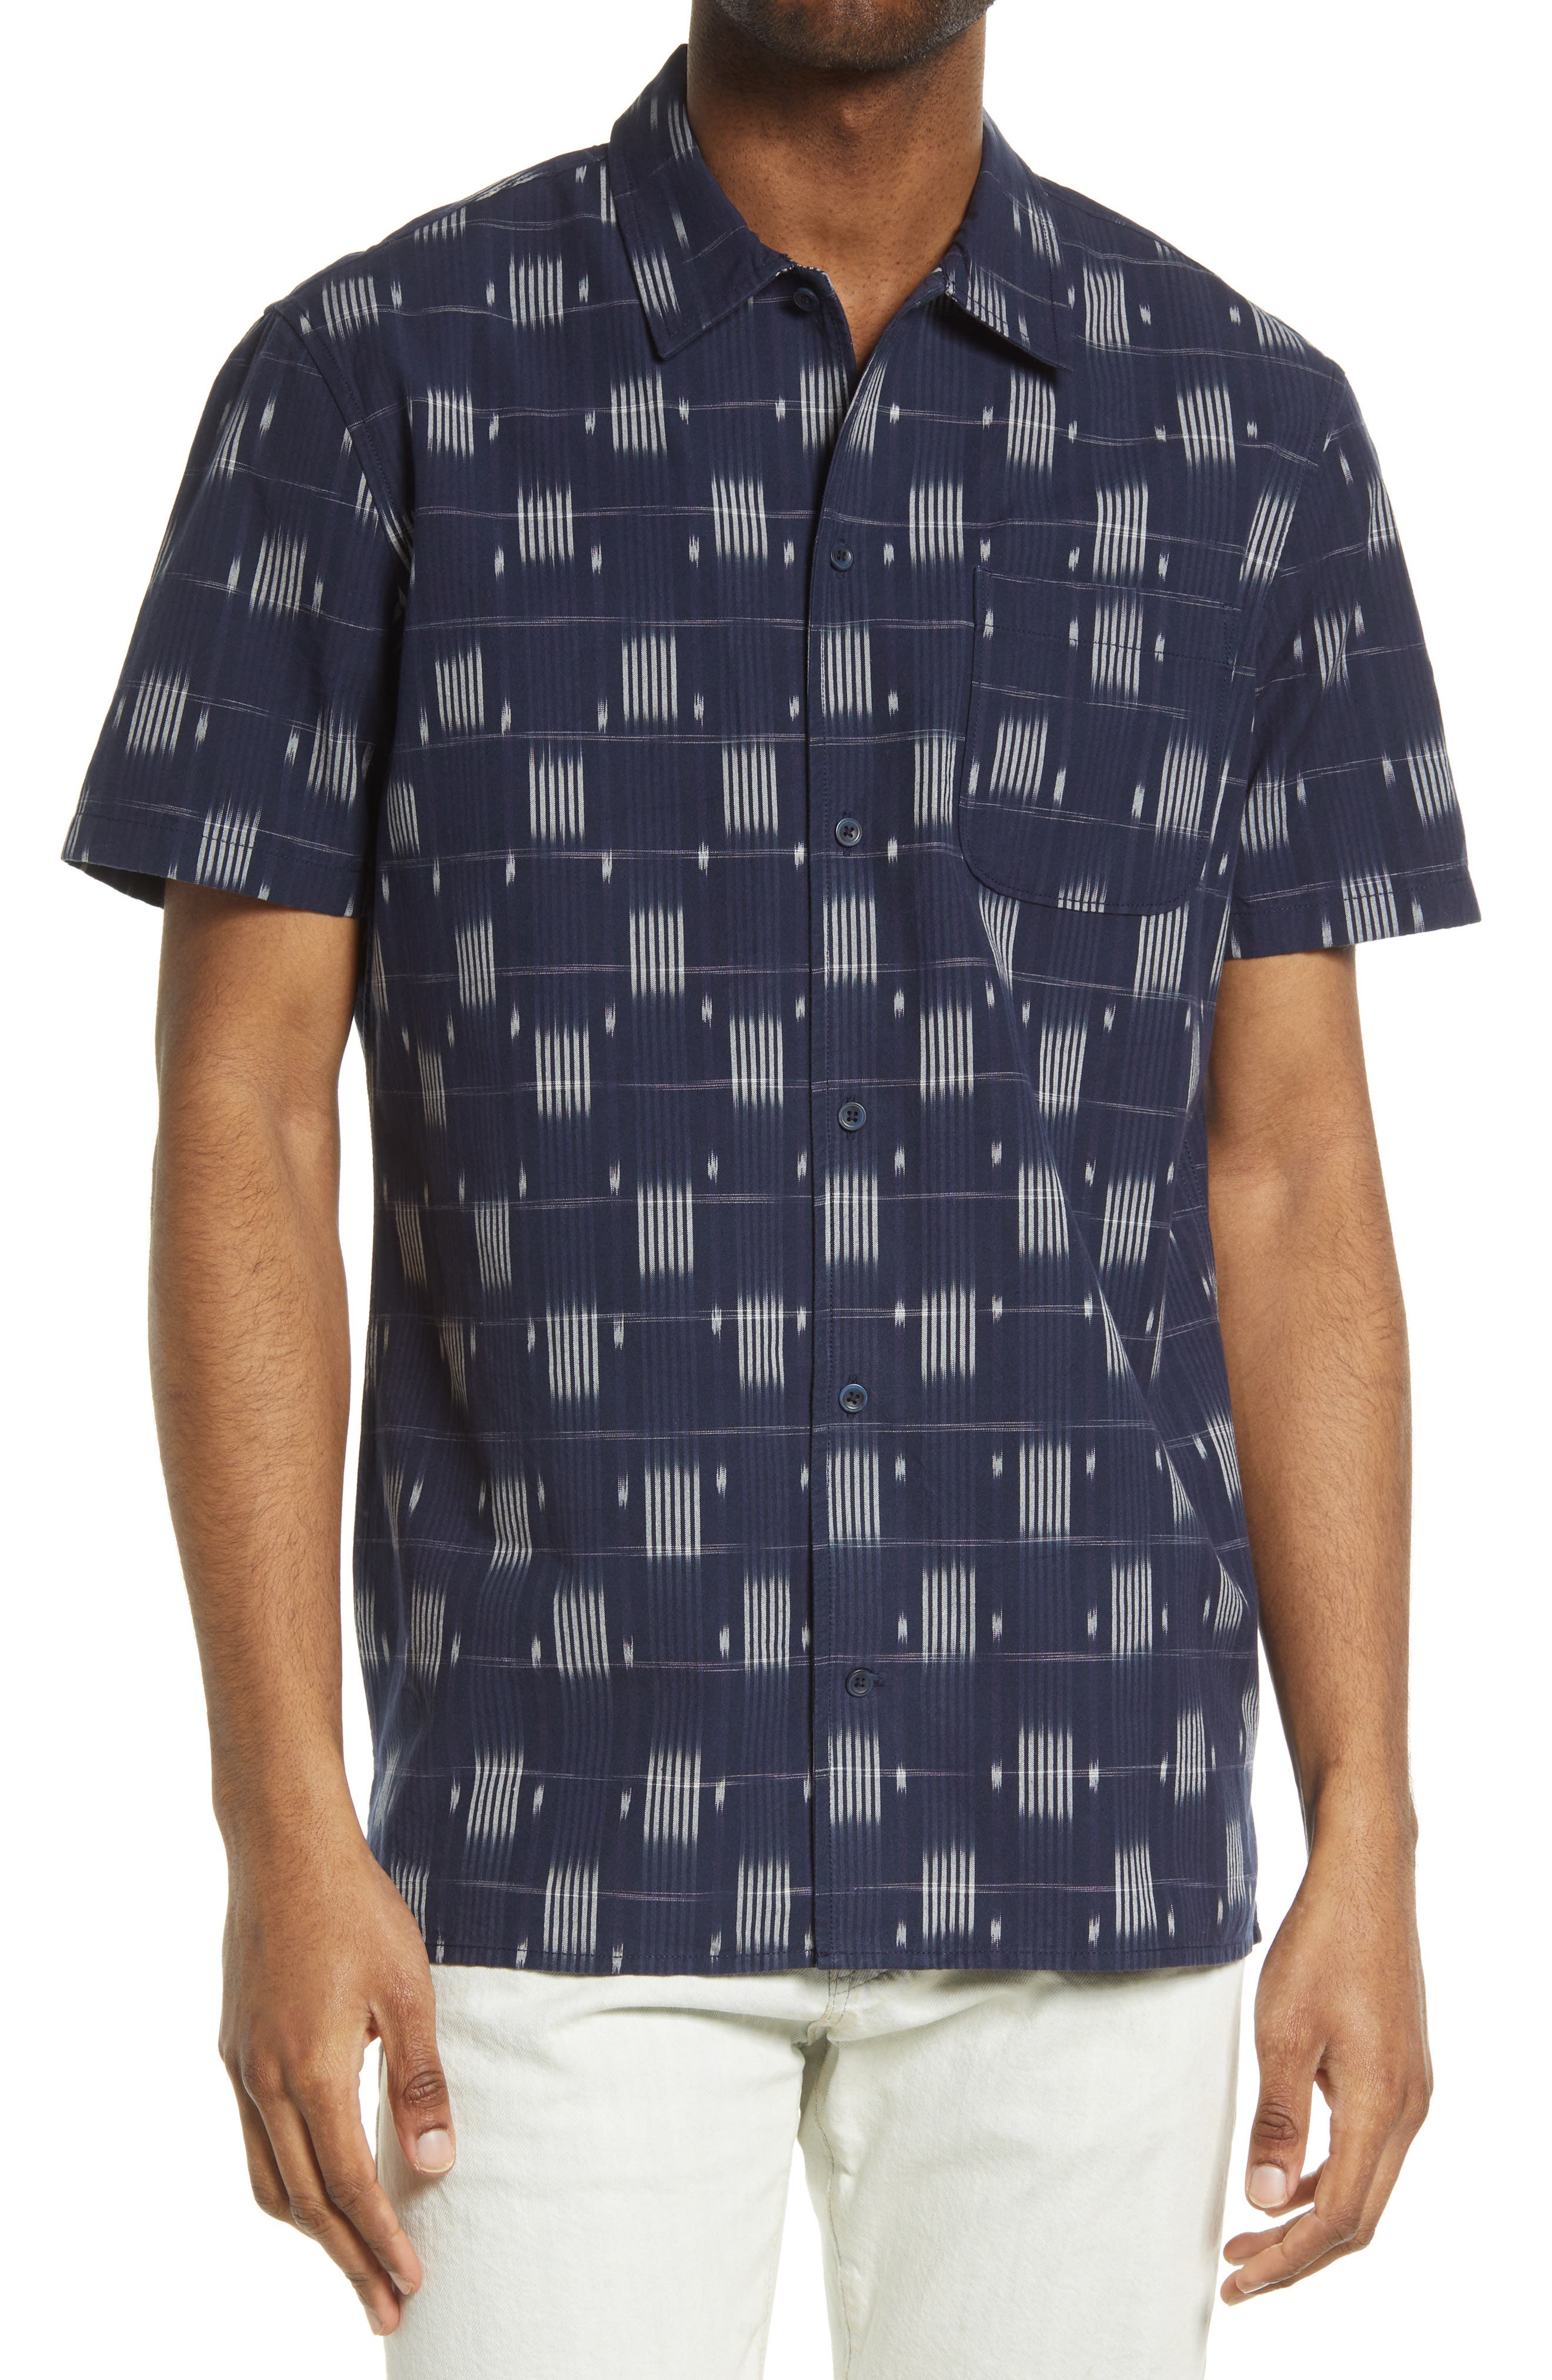 Zimaes-Men Silm Fit Hawaiian Floral Print Beachwear Short Sleeve Western Shirt